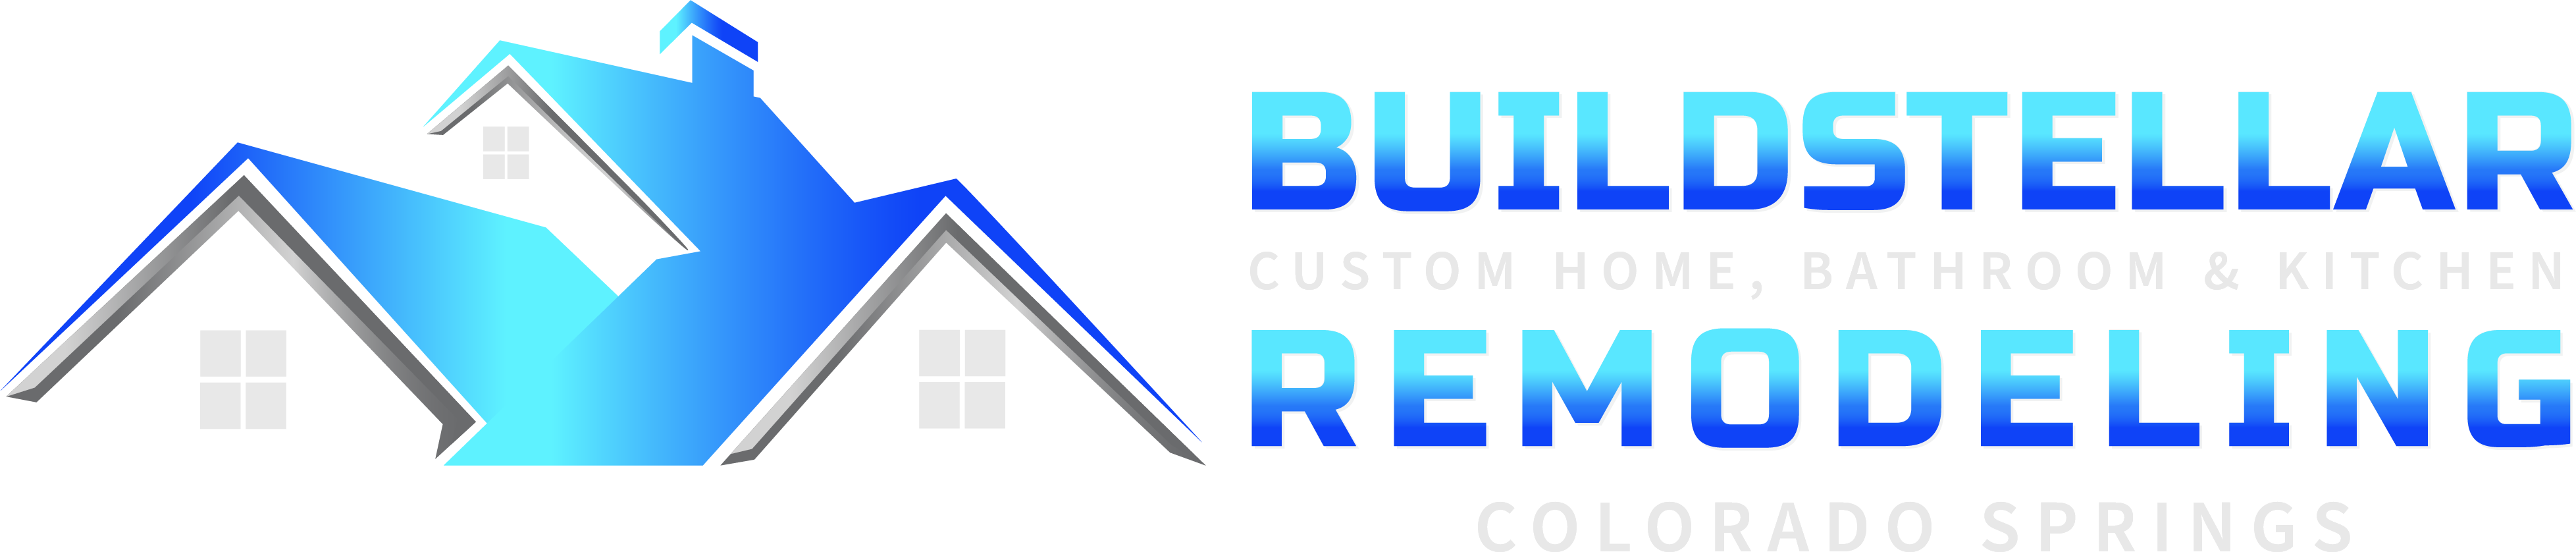 BuildStellar Custom Home, Bathroom & Kitchen Remodeling Horizontal Logo 2